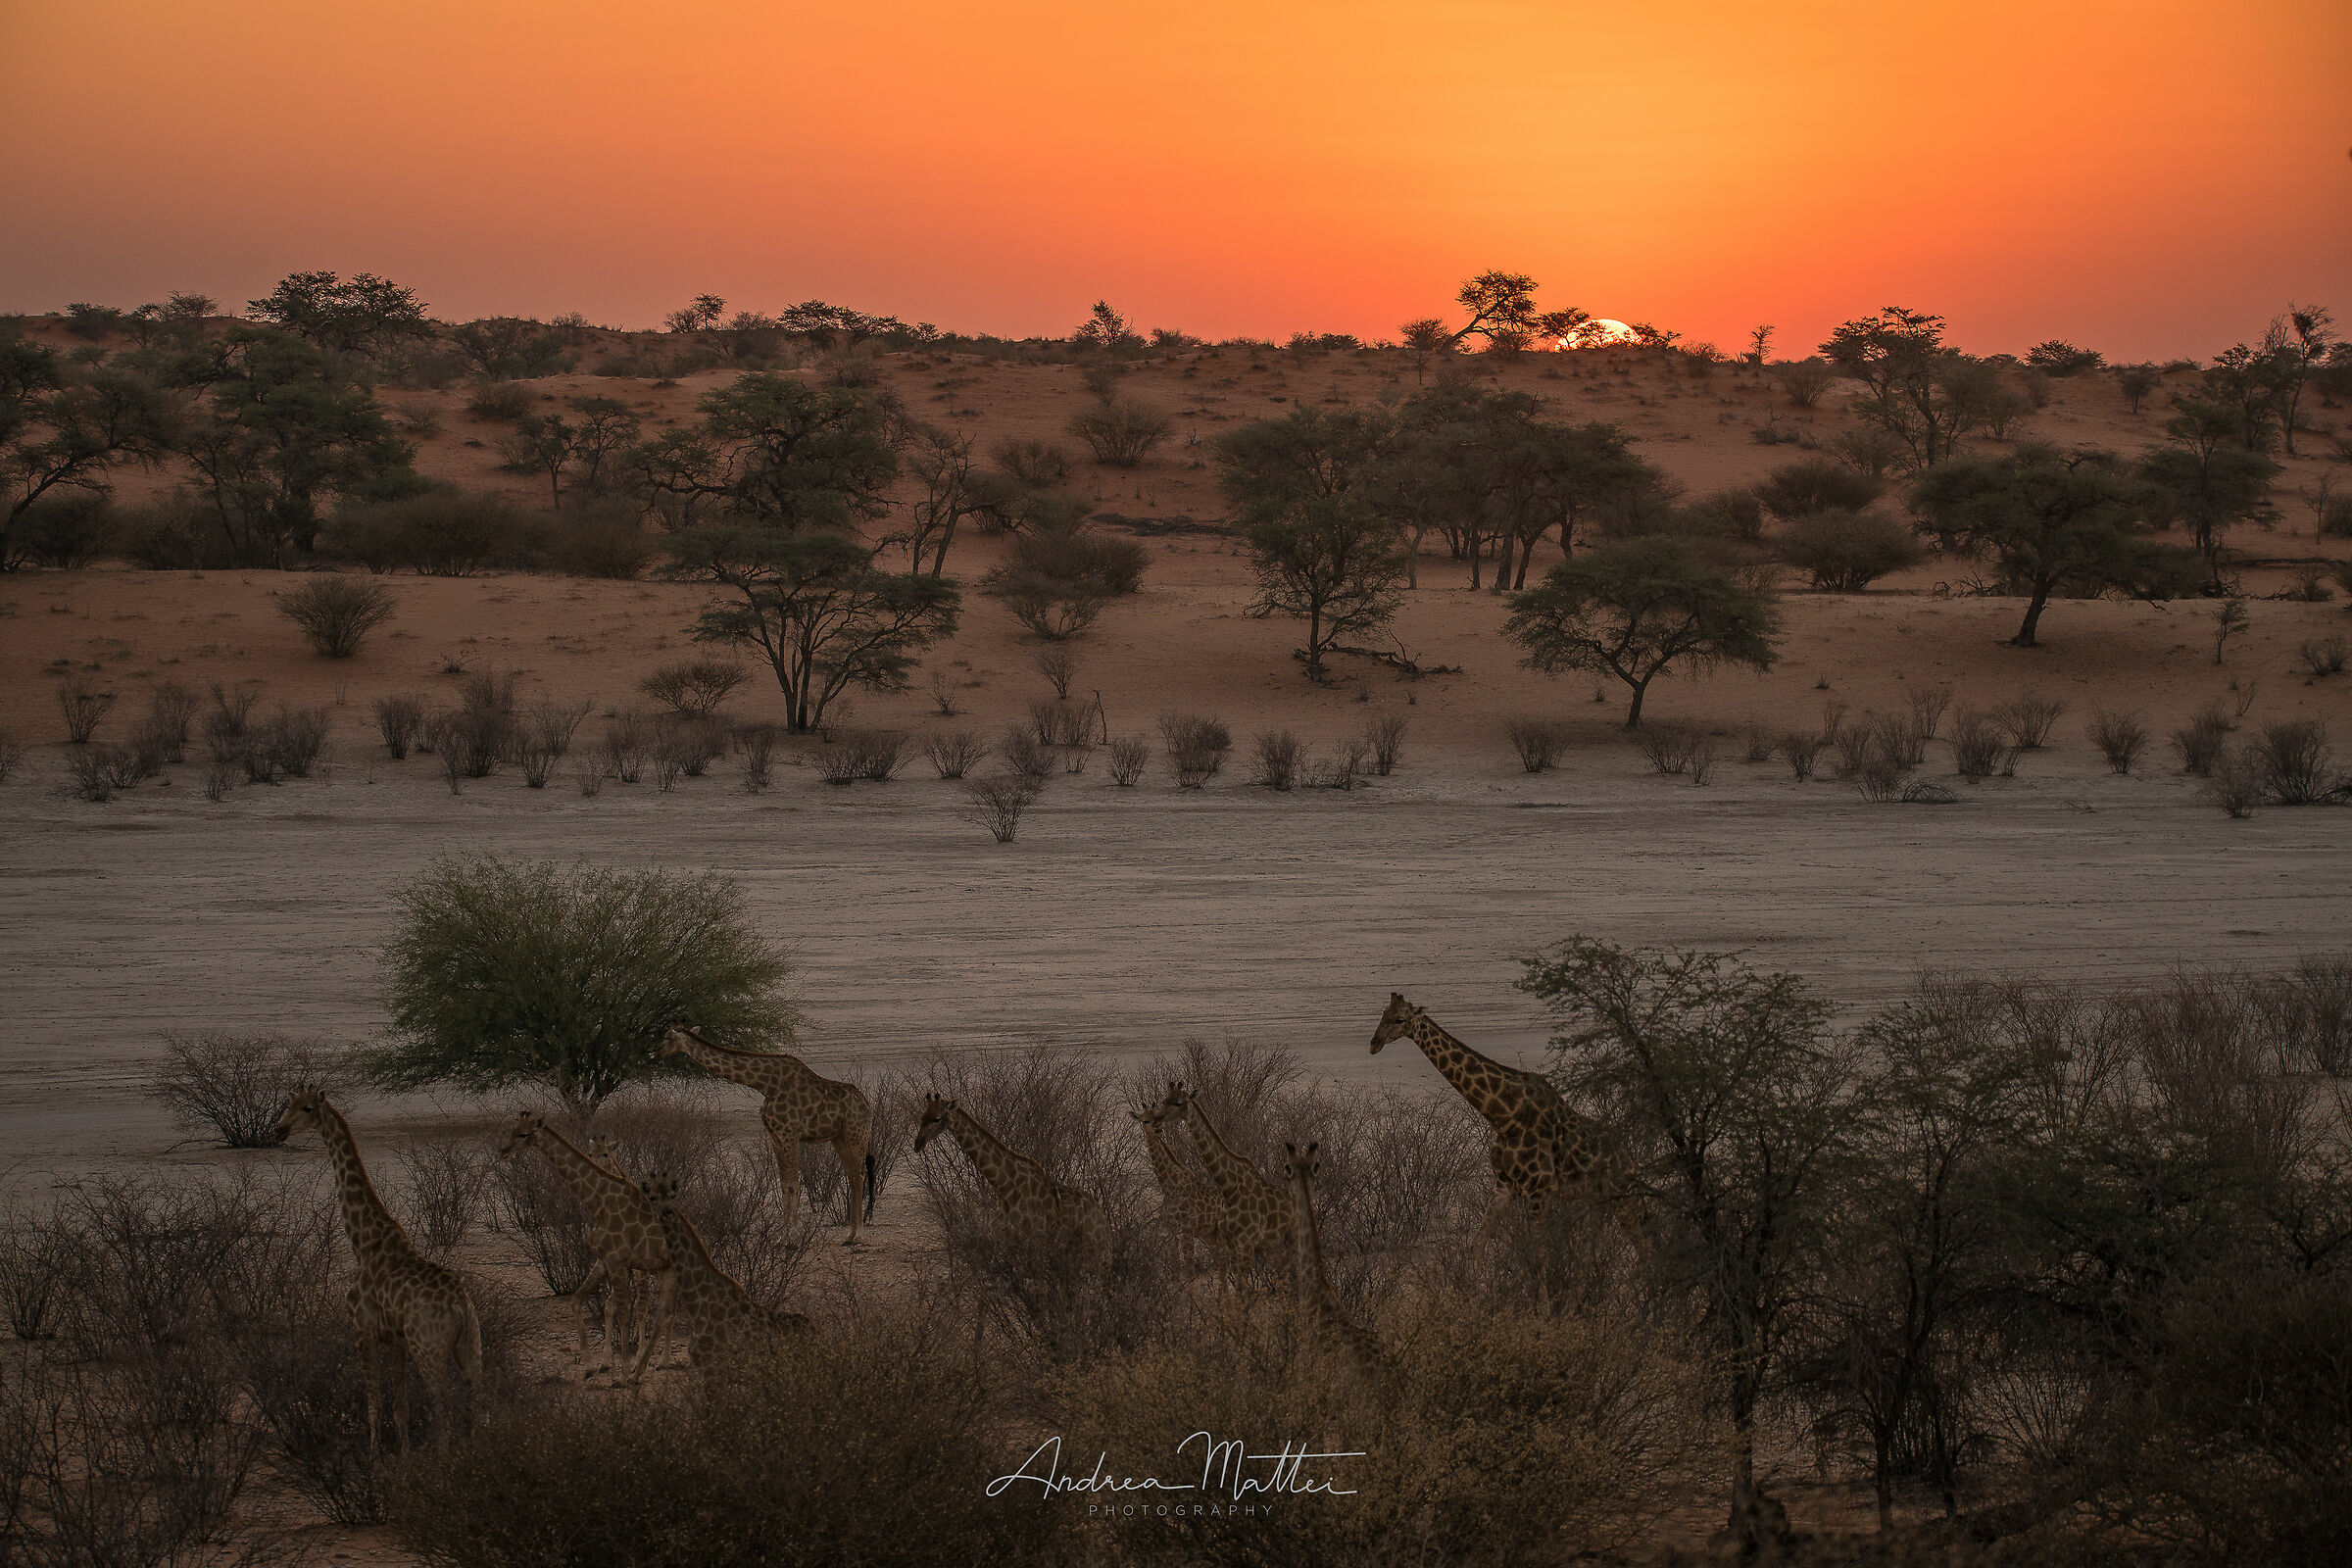 Kalahari Desert: Sunset with Giraffes...